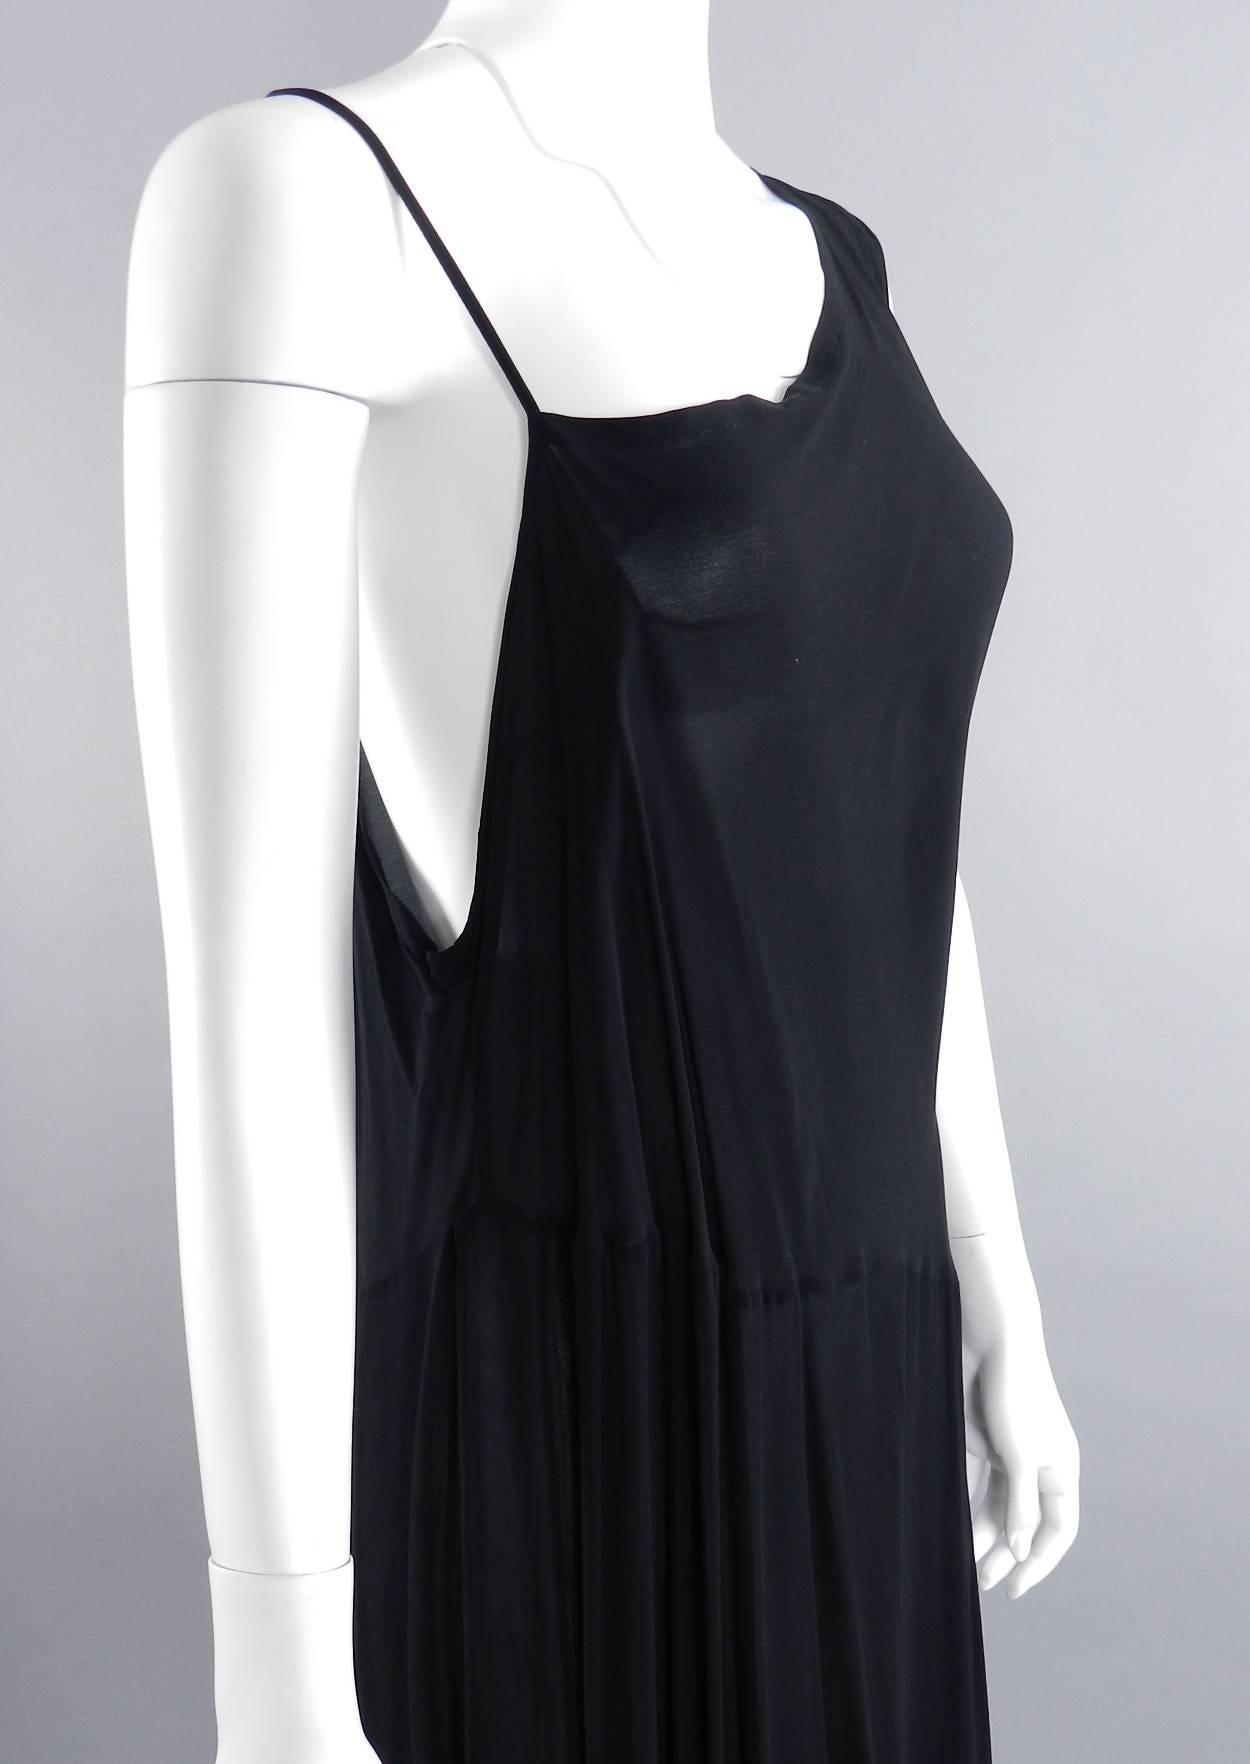 Yohji Yamamoto Vintage 1980’s Black Long Sheer Dress 2